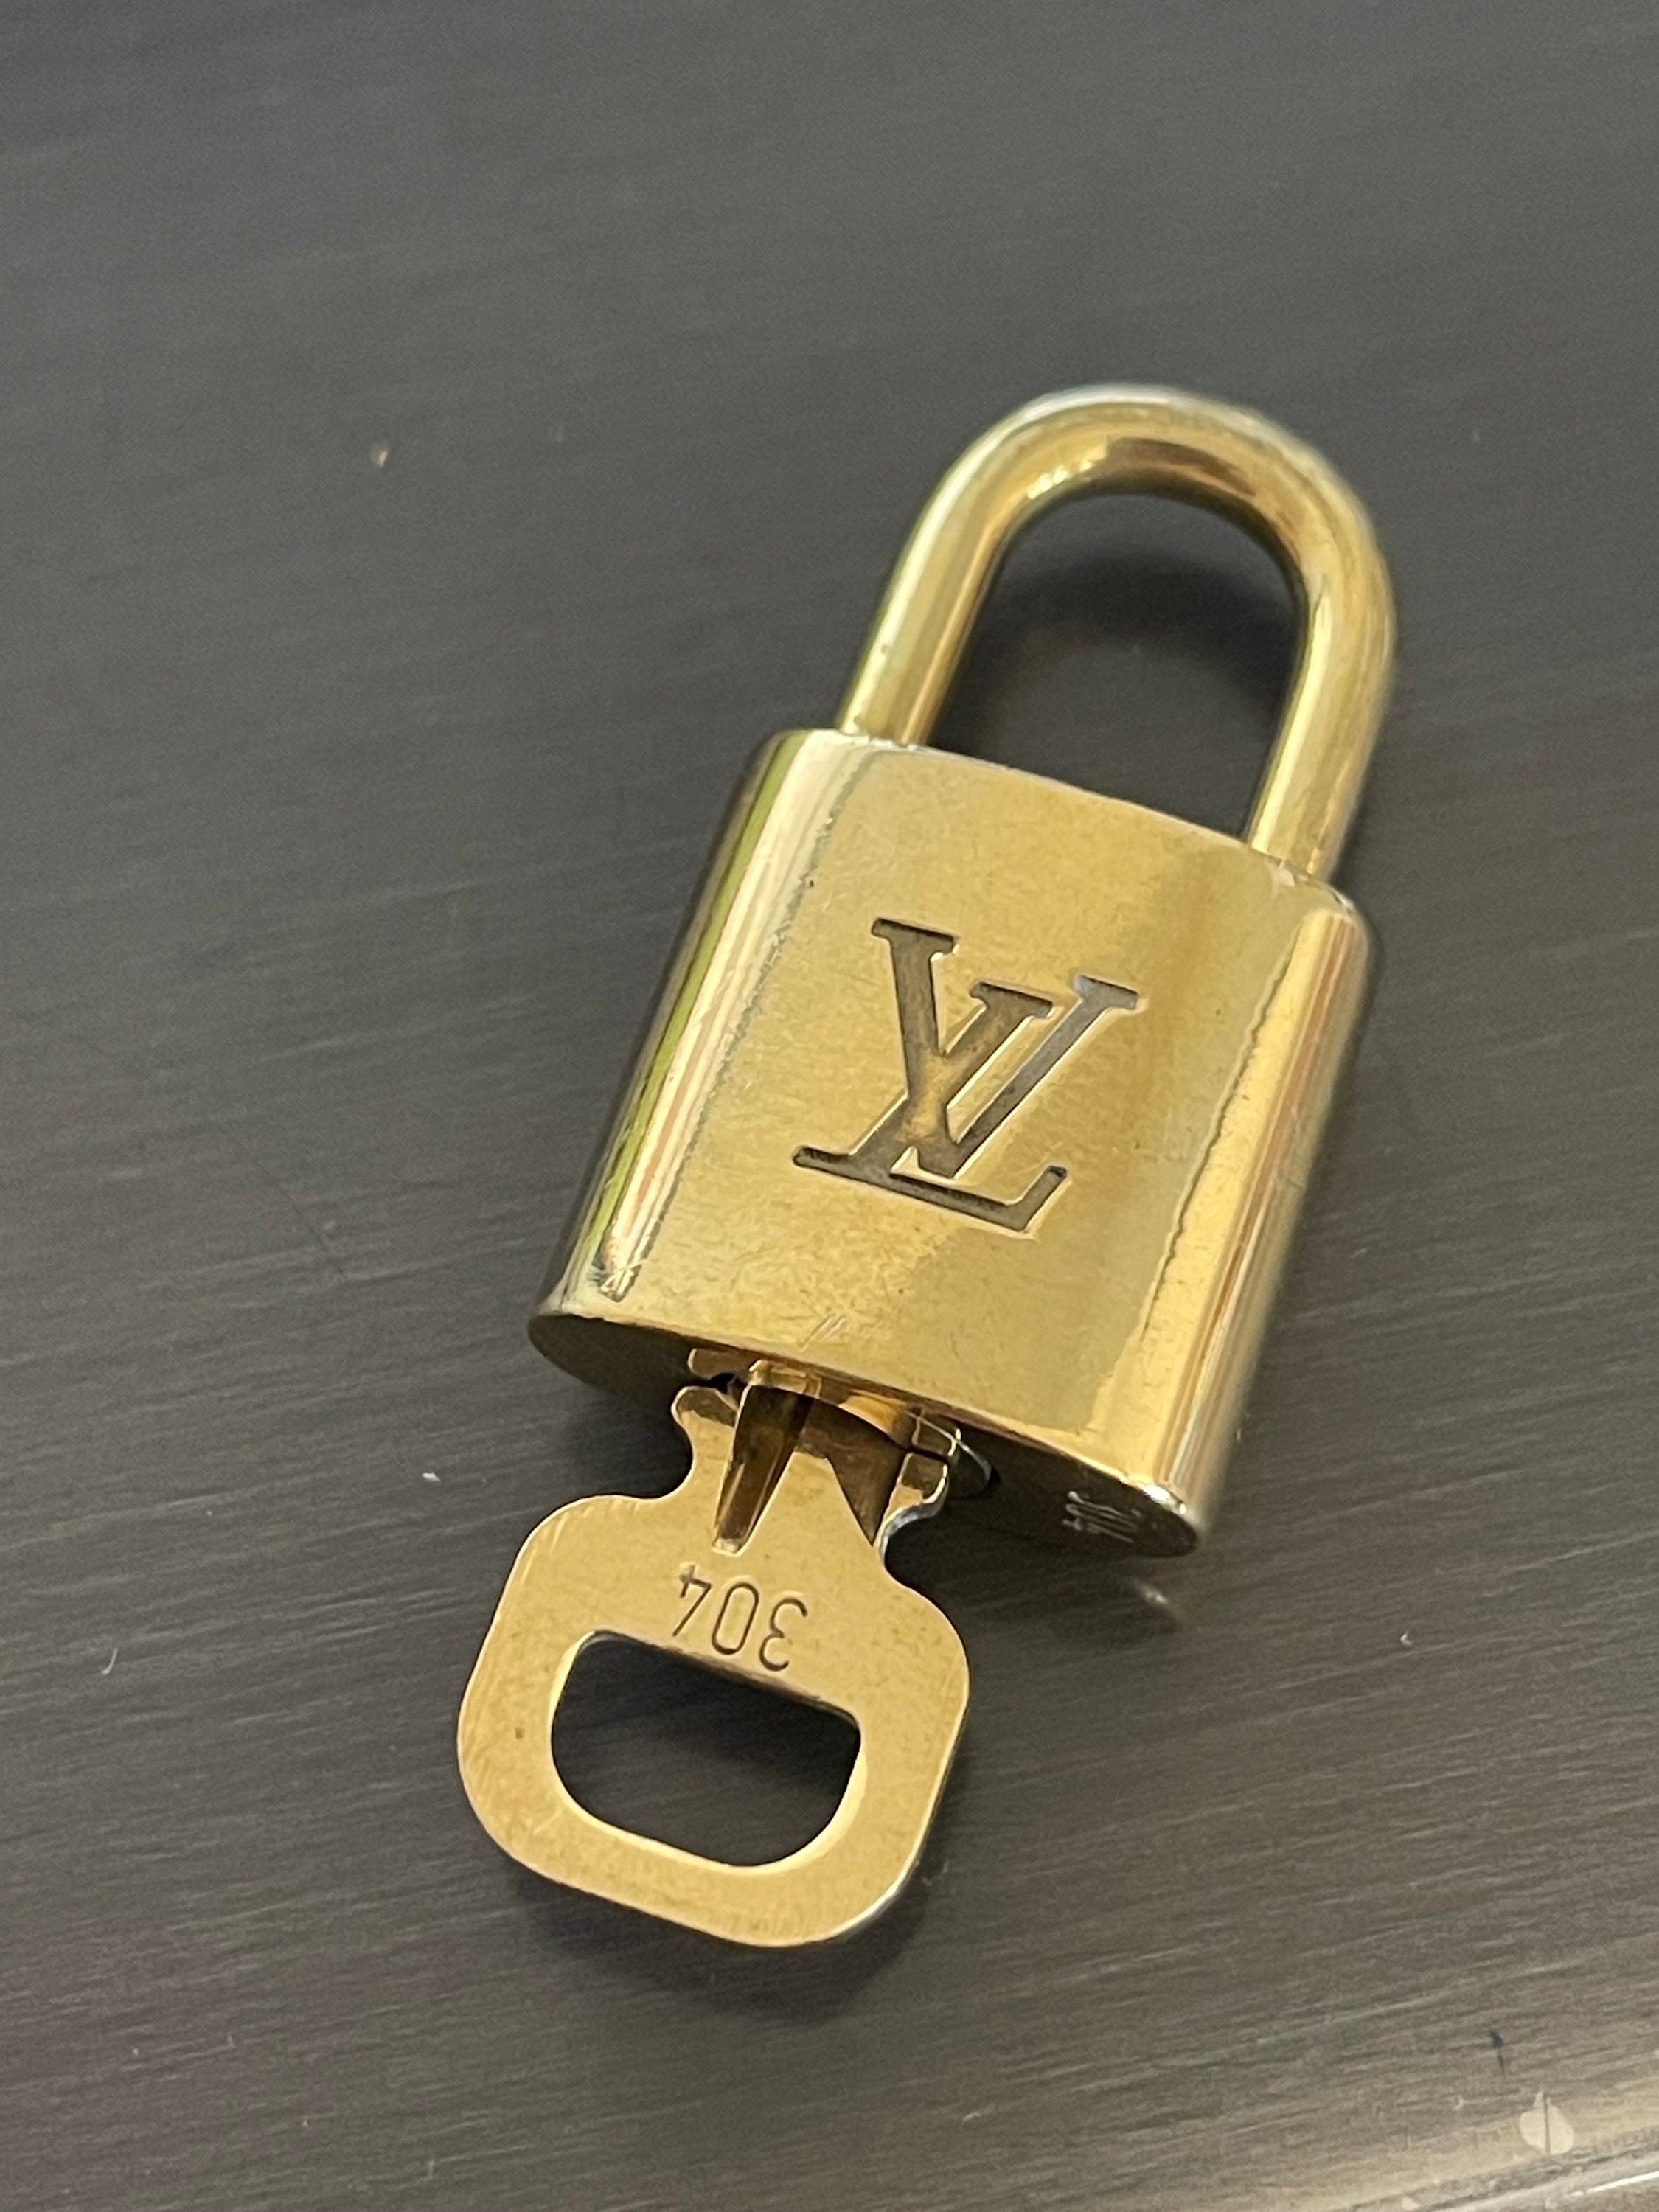 Louis Vuitton Padlock and NO KEY 306 Lock Brass 6142 